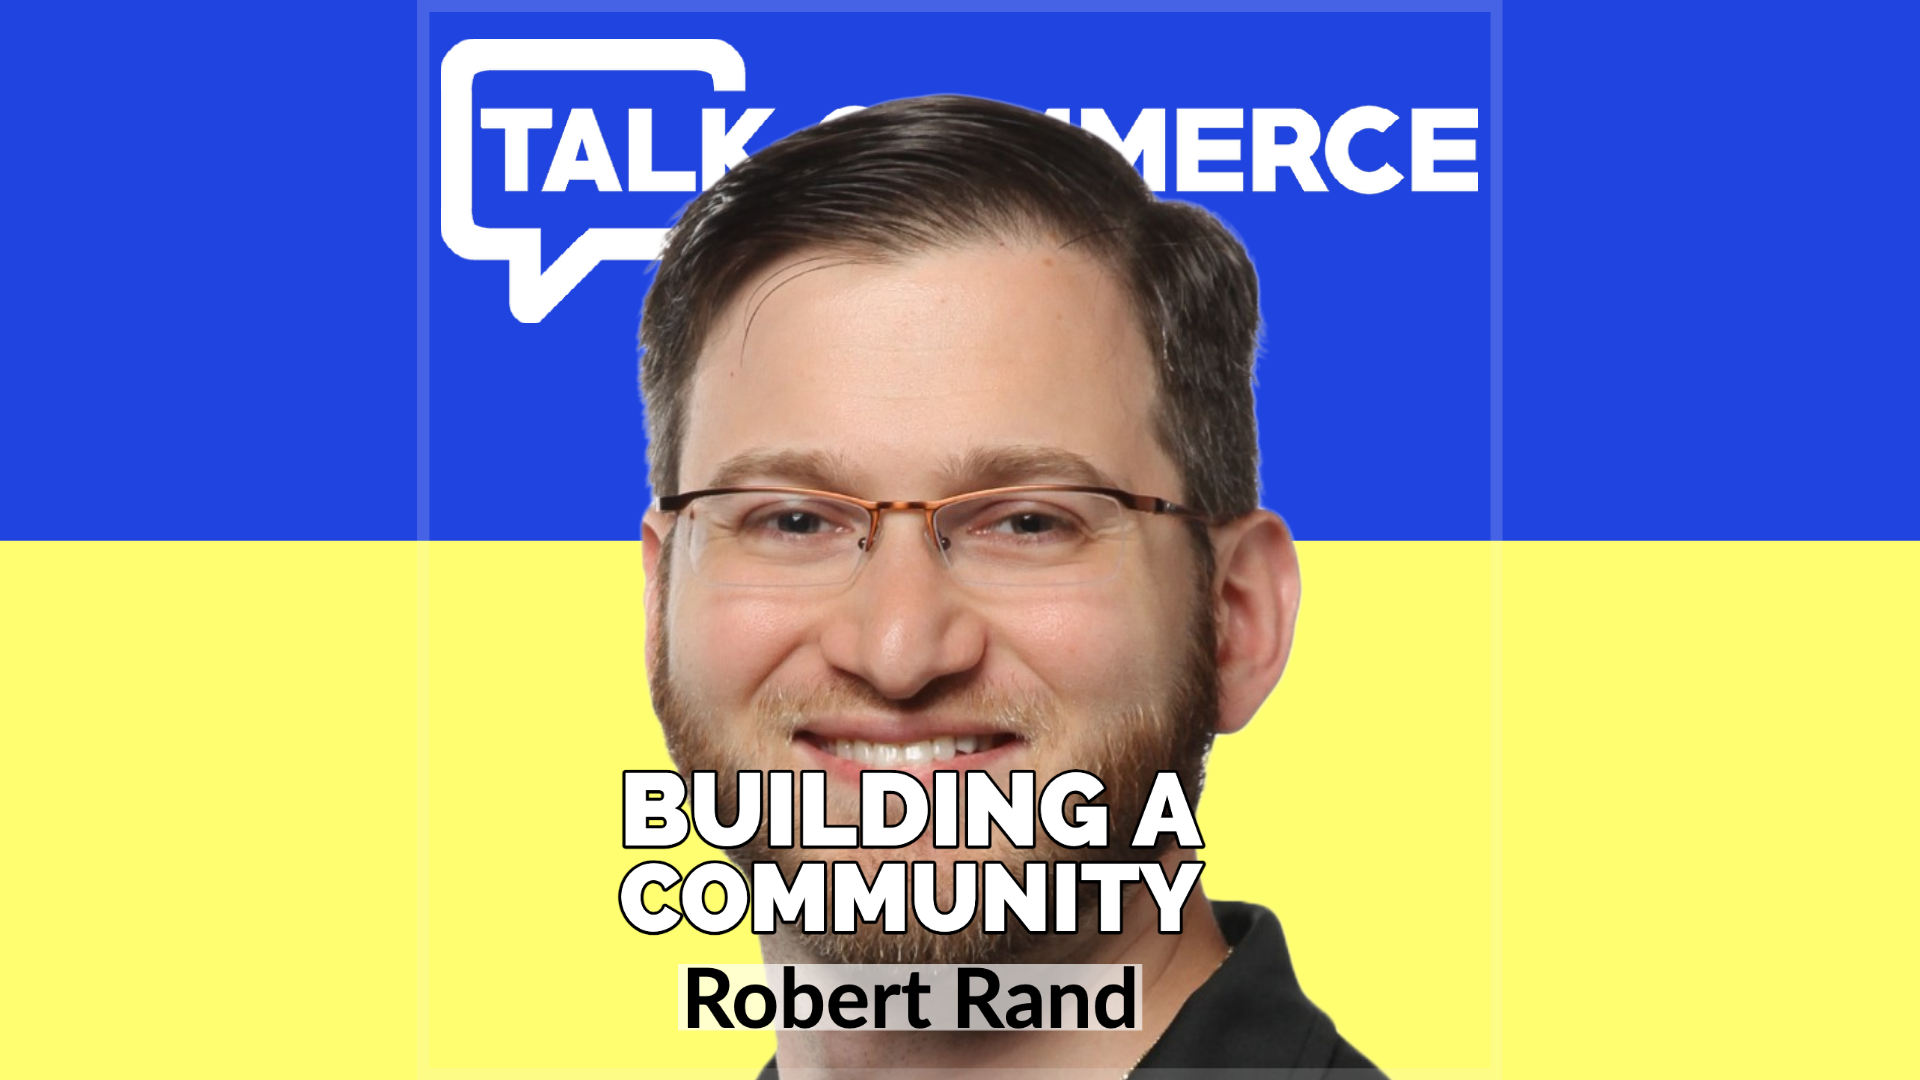 Talk-Commerce Robert Rand Community